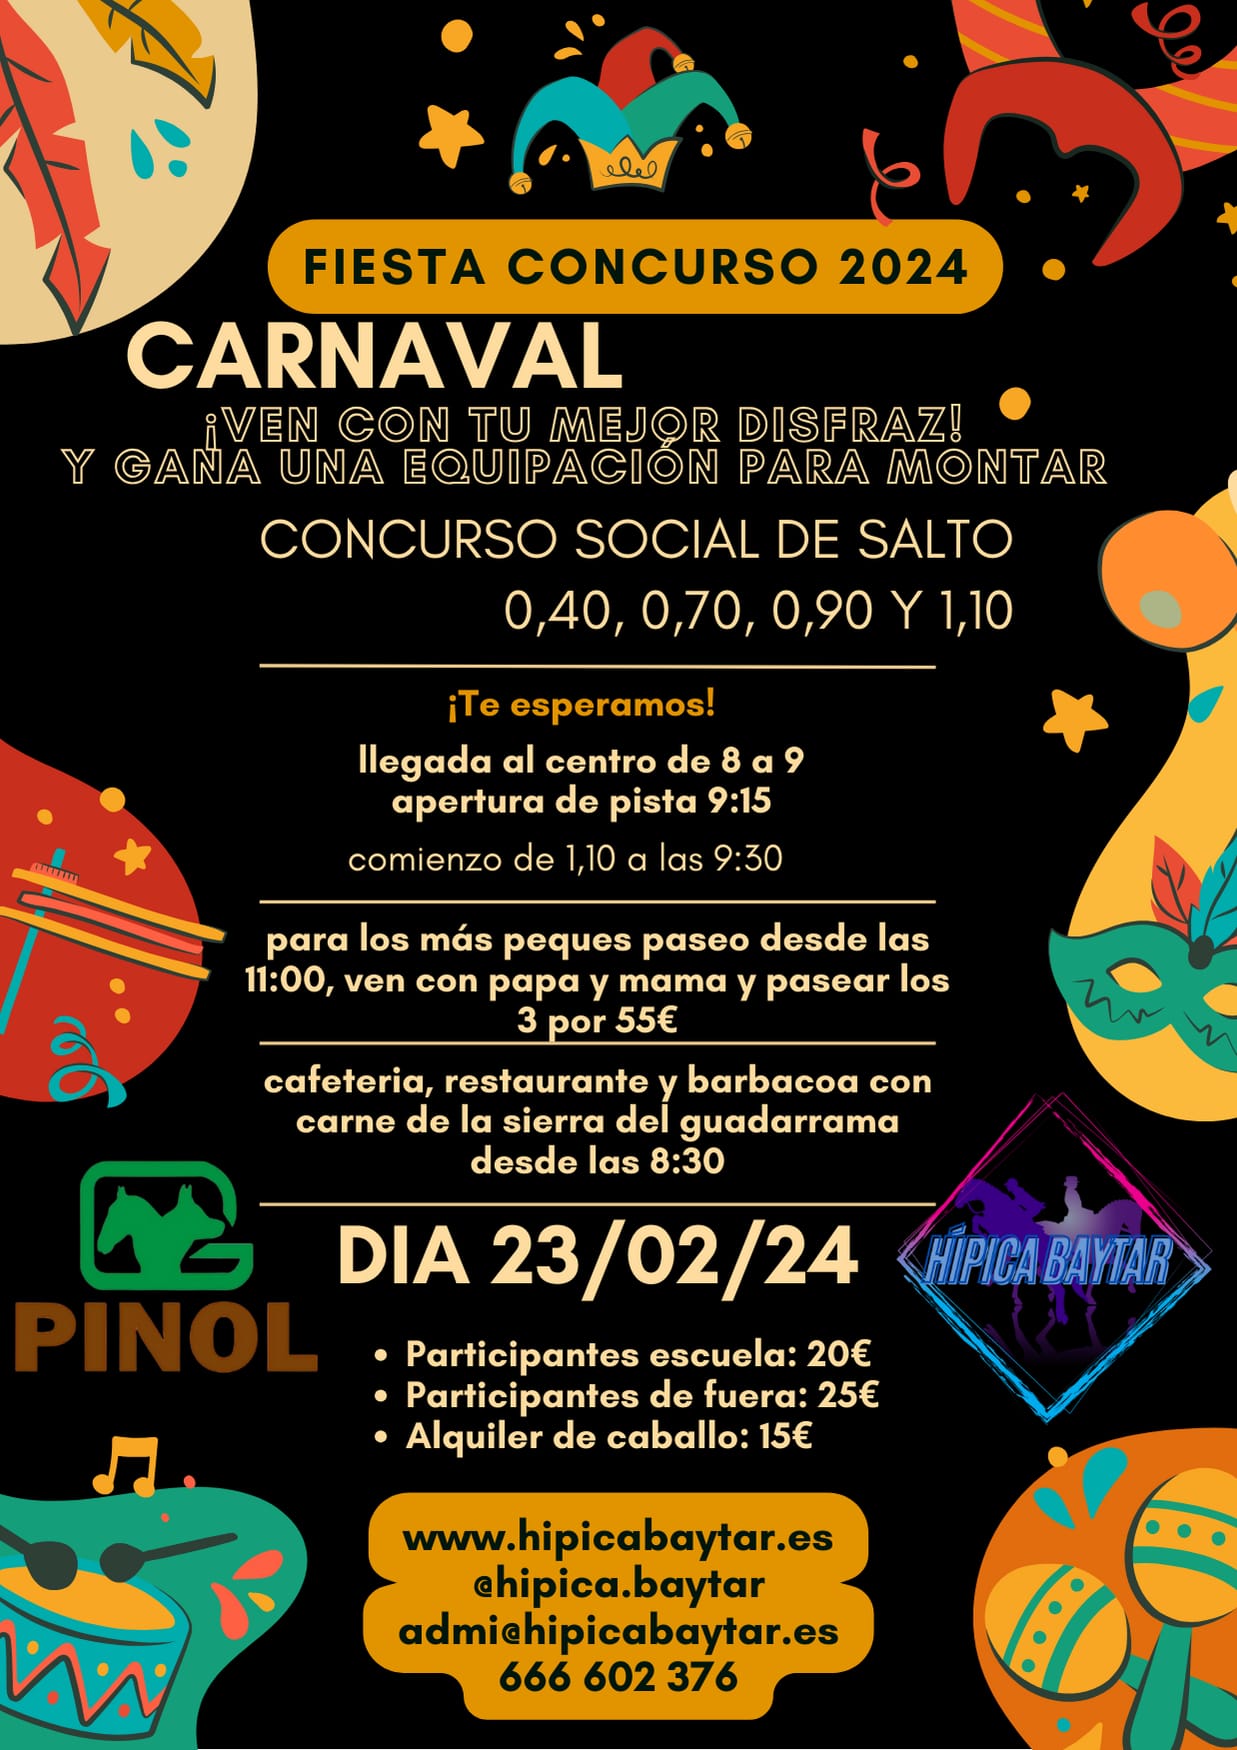 Social salto Carnaval